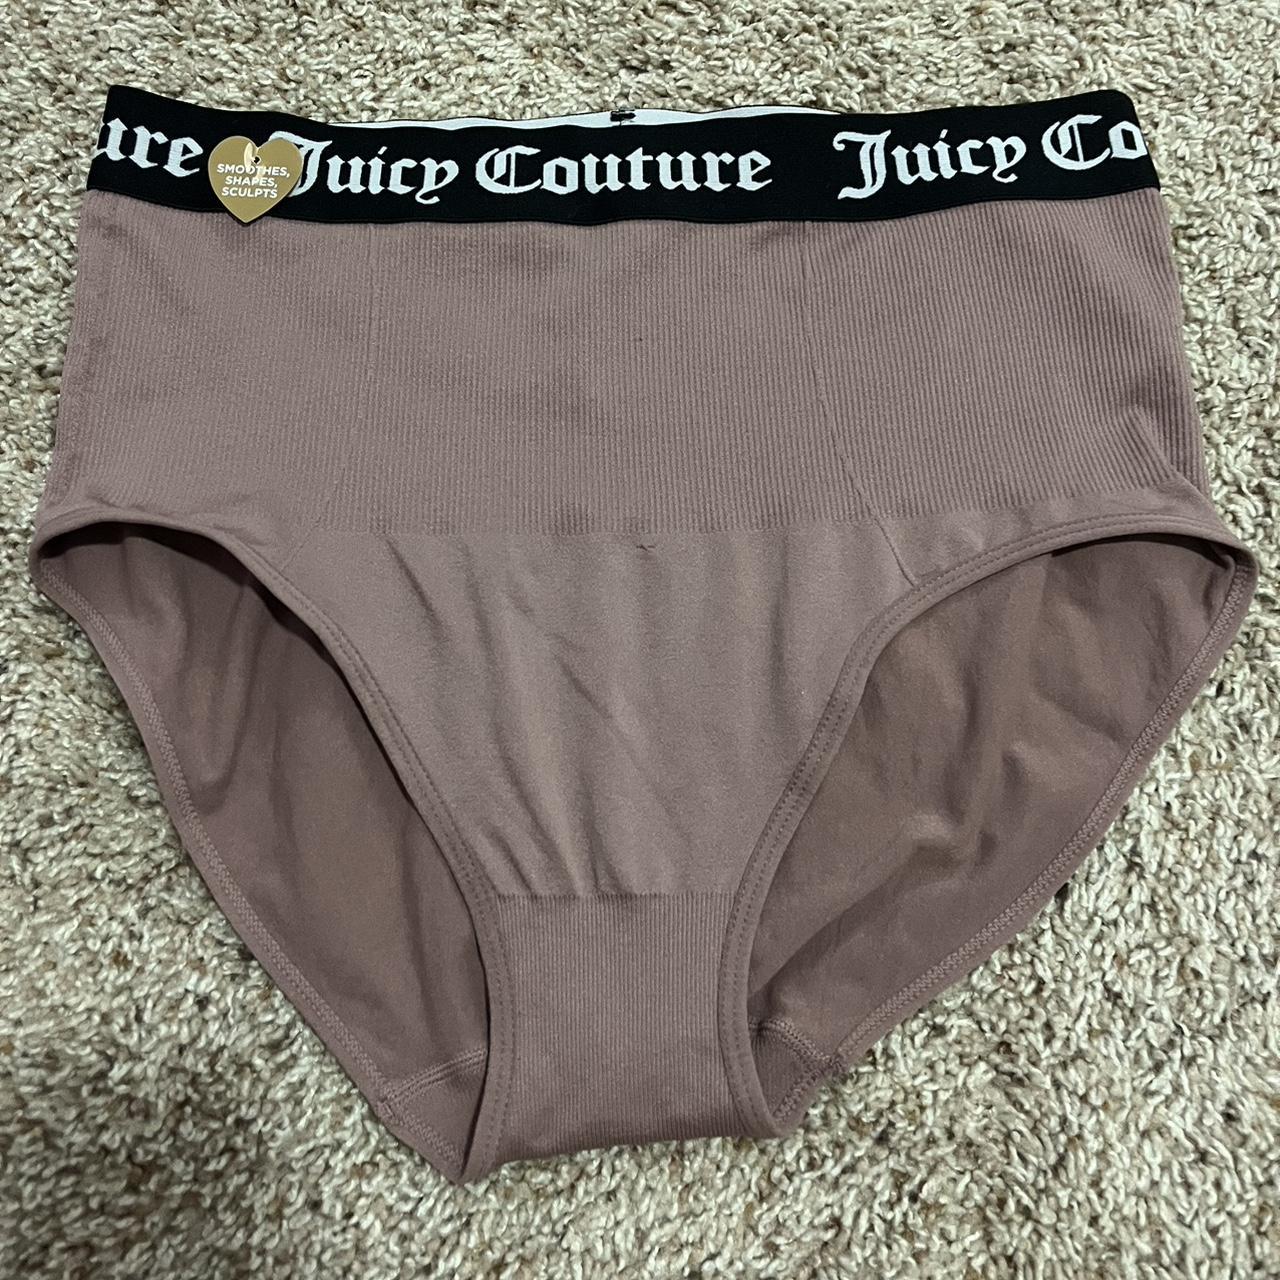 item - juicy couture underwear , brand - juicy